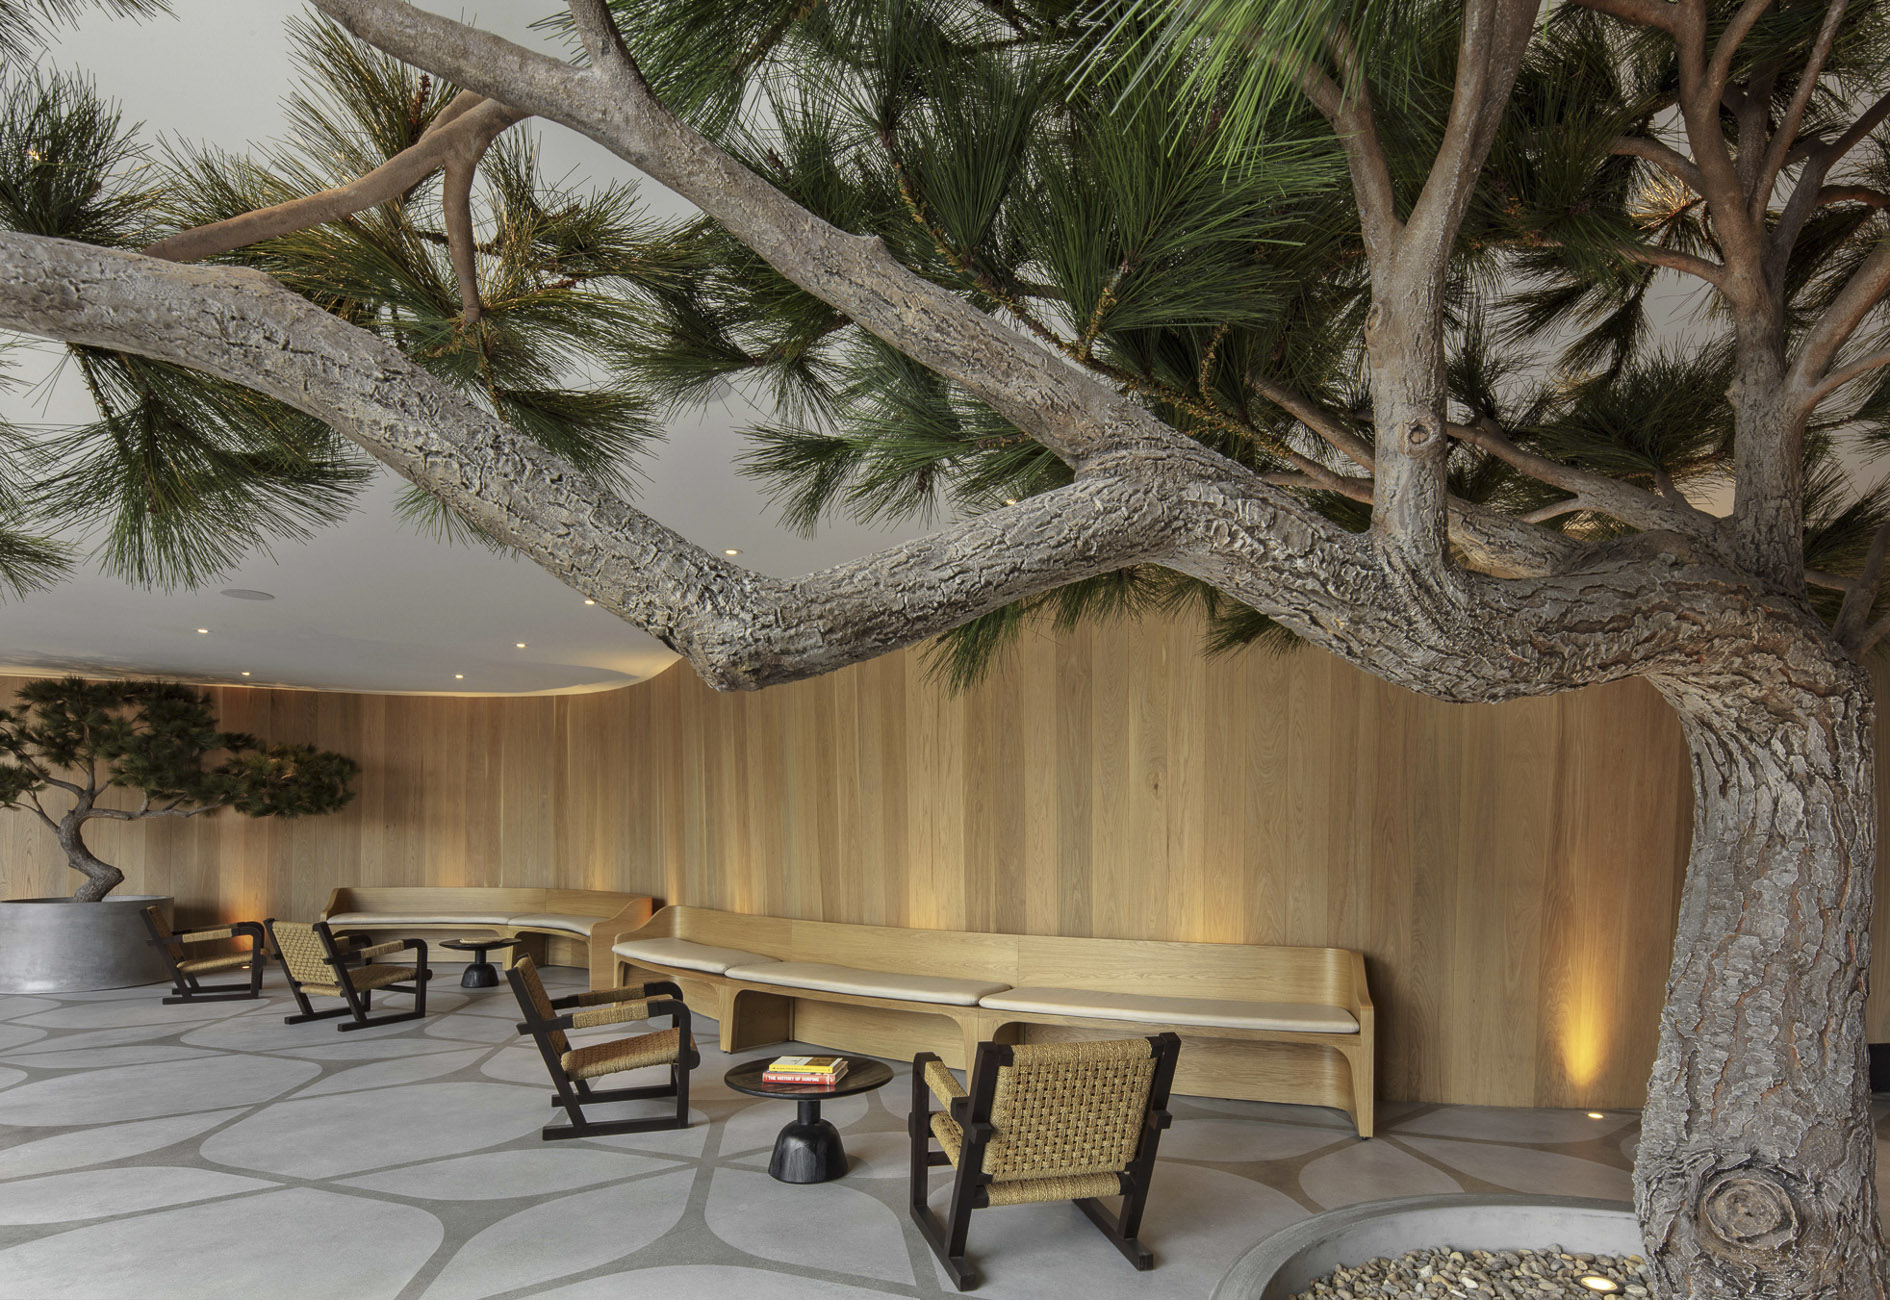 Alila Marea Beach Resort designed by Mark Zeff Design